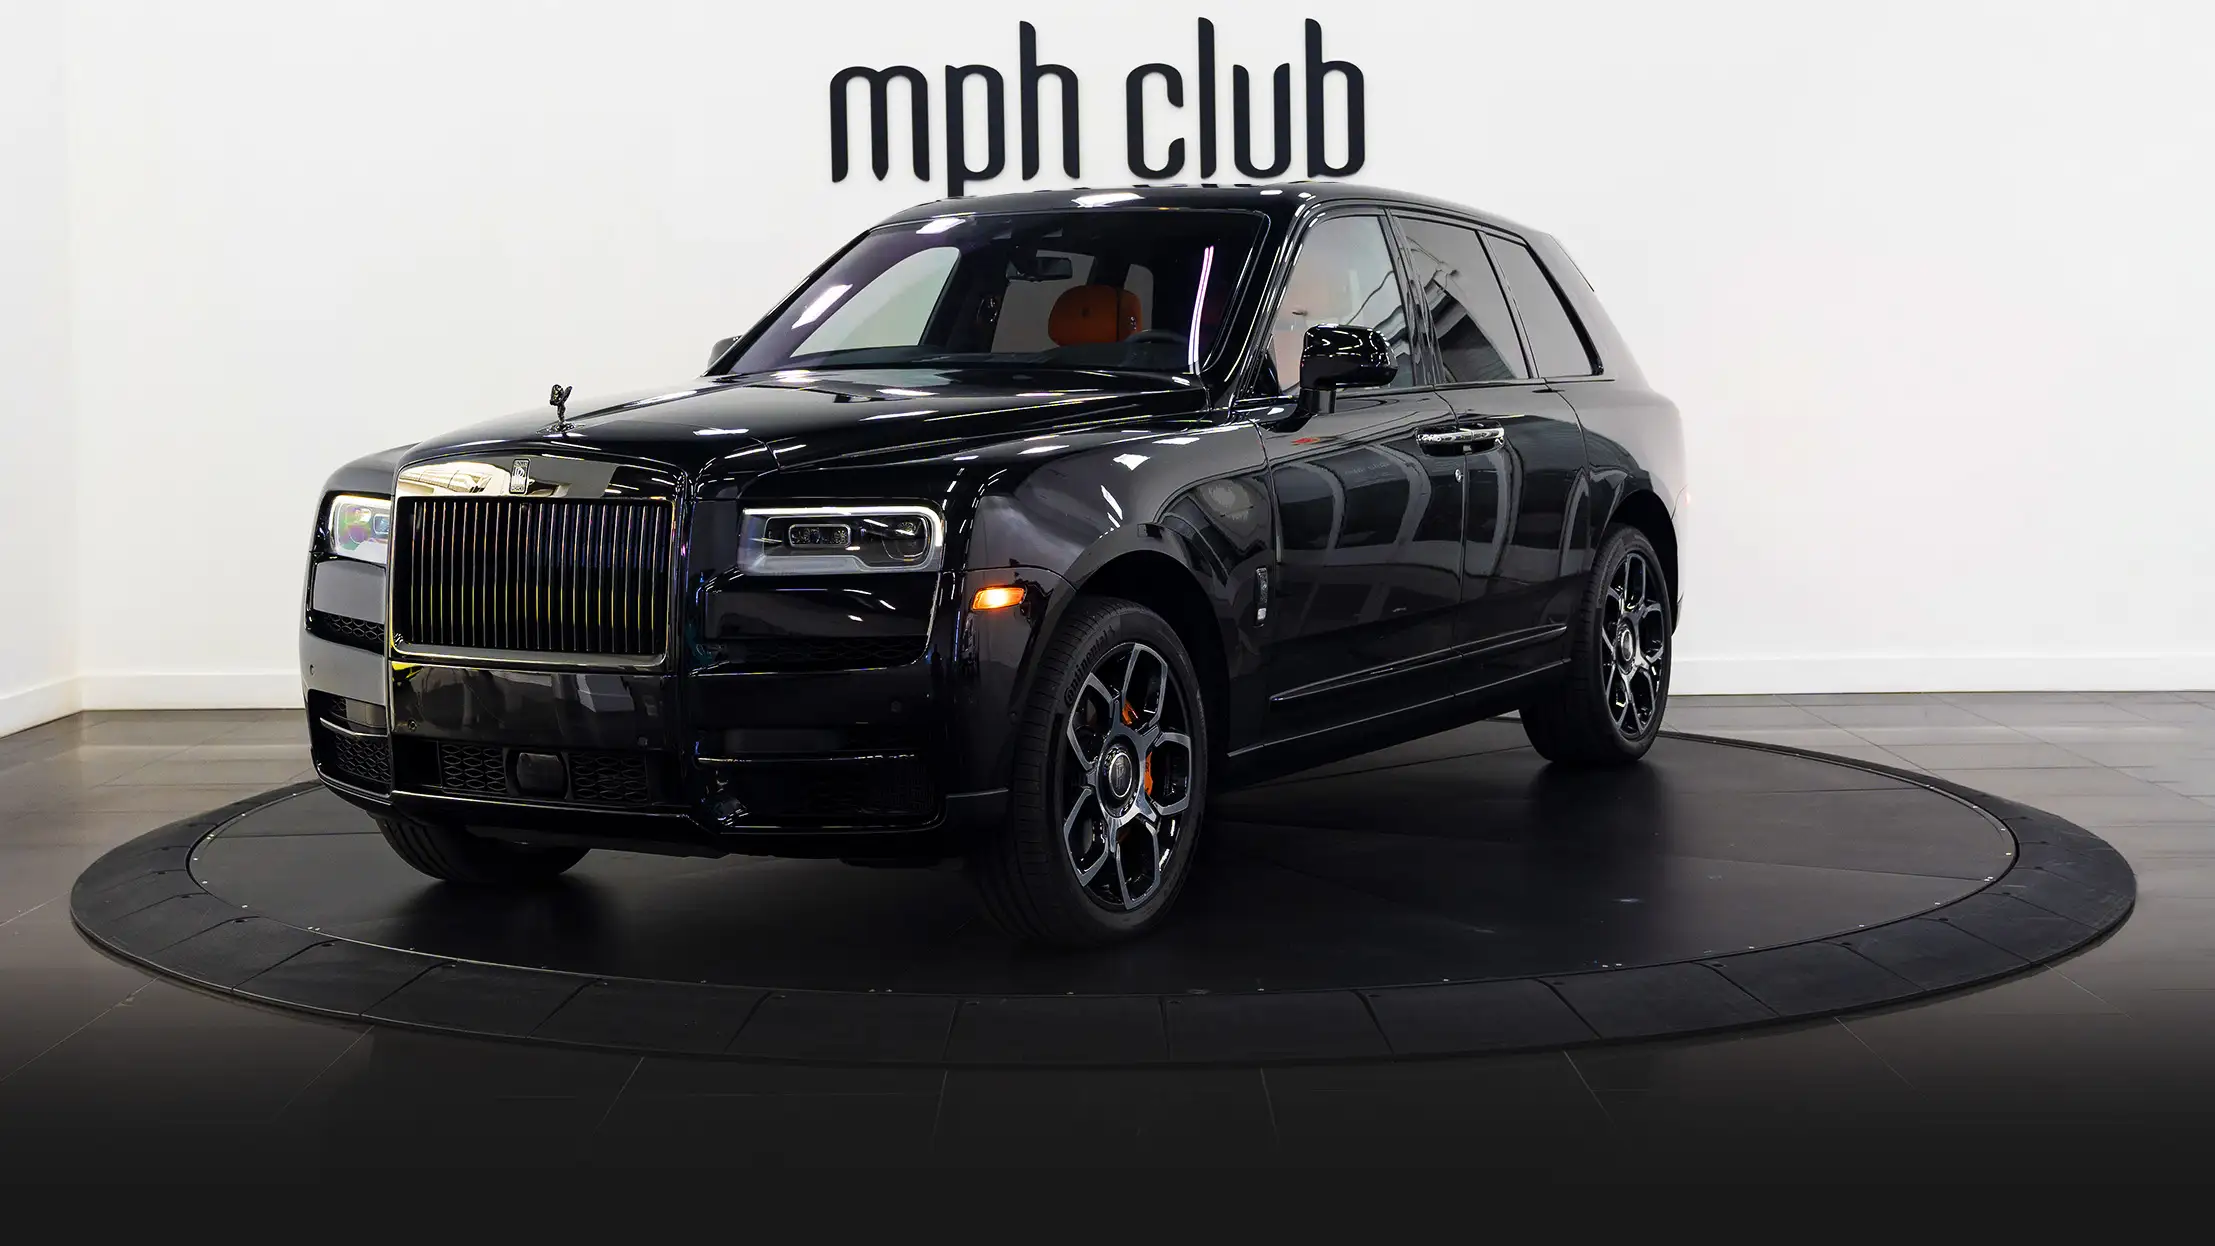 Black on orange Rolls Royce Cullinan black badge rental profile view mph club